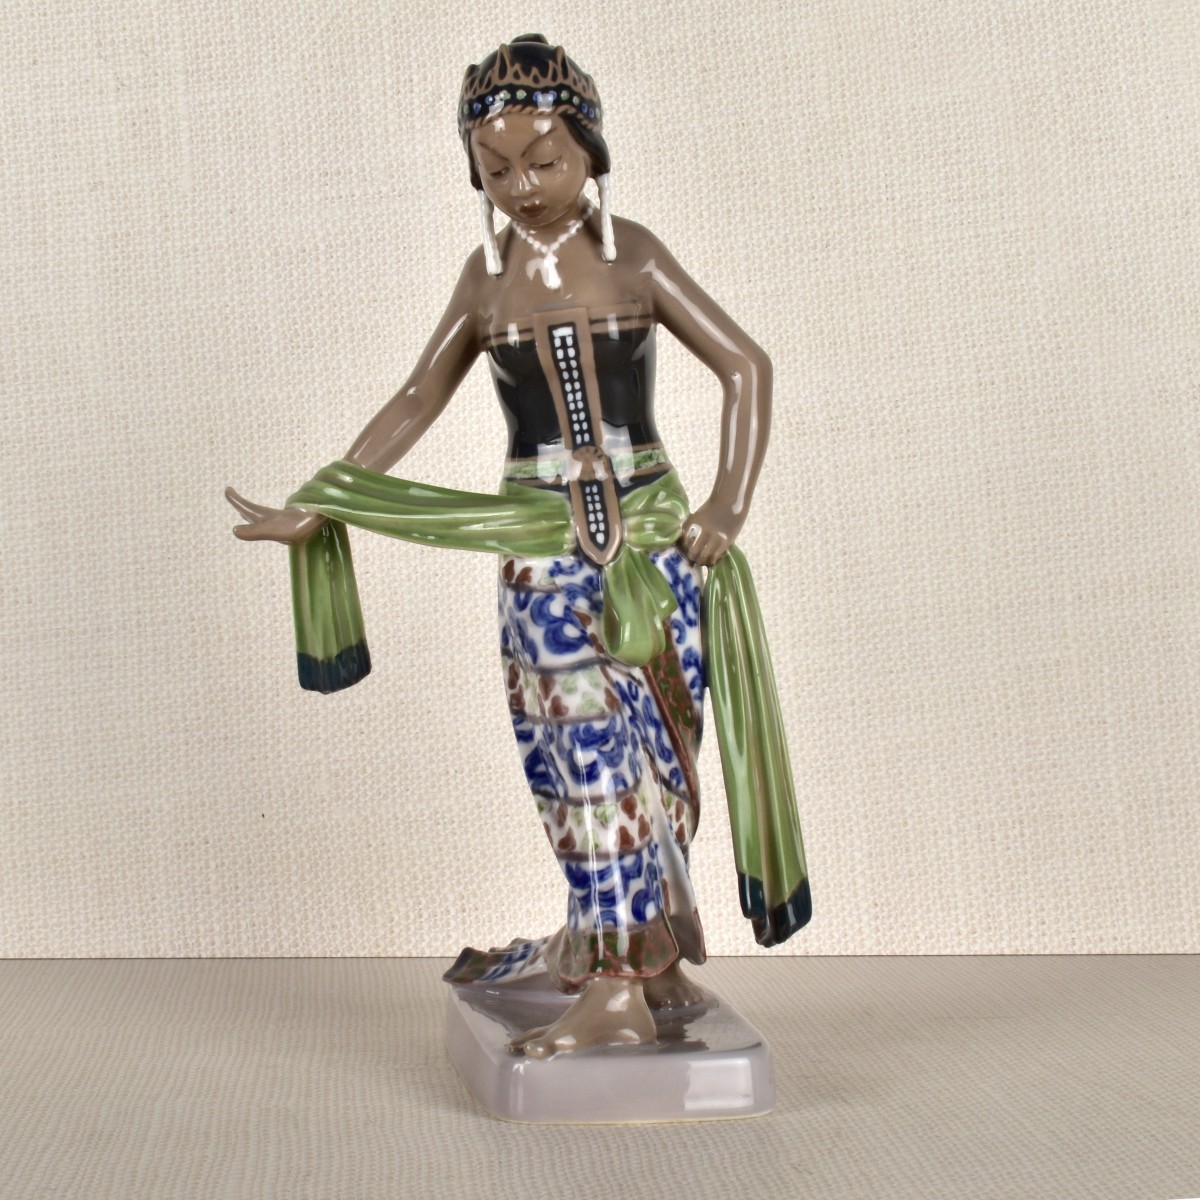 Porcelain Figurine of a Dancer